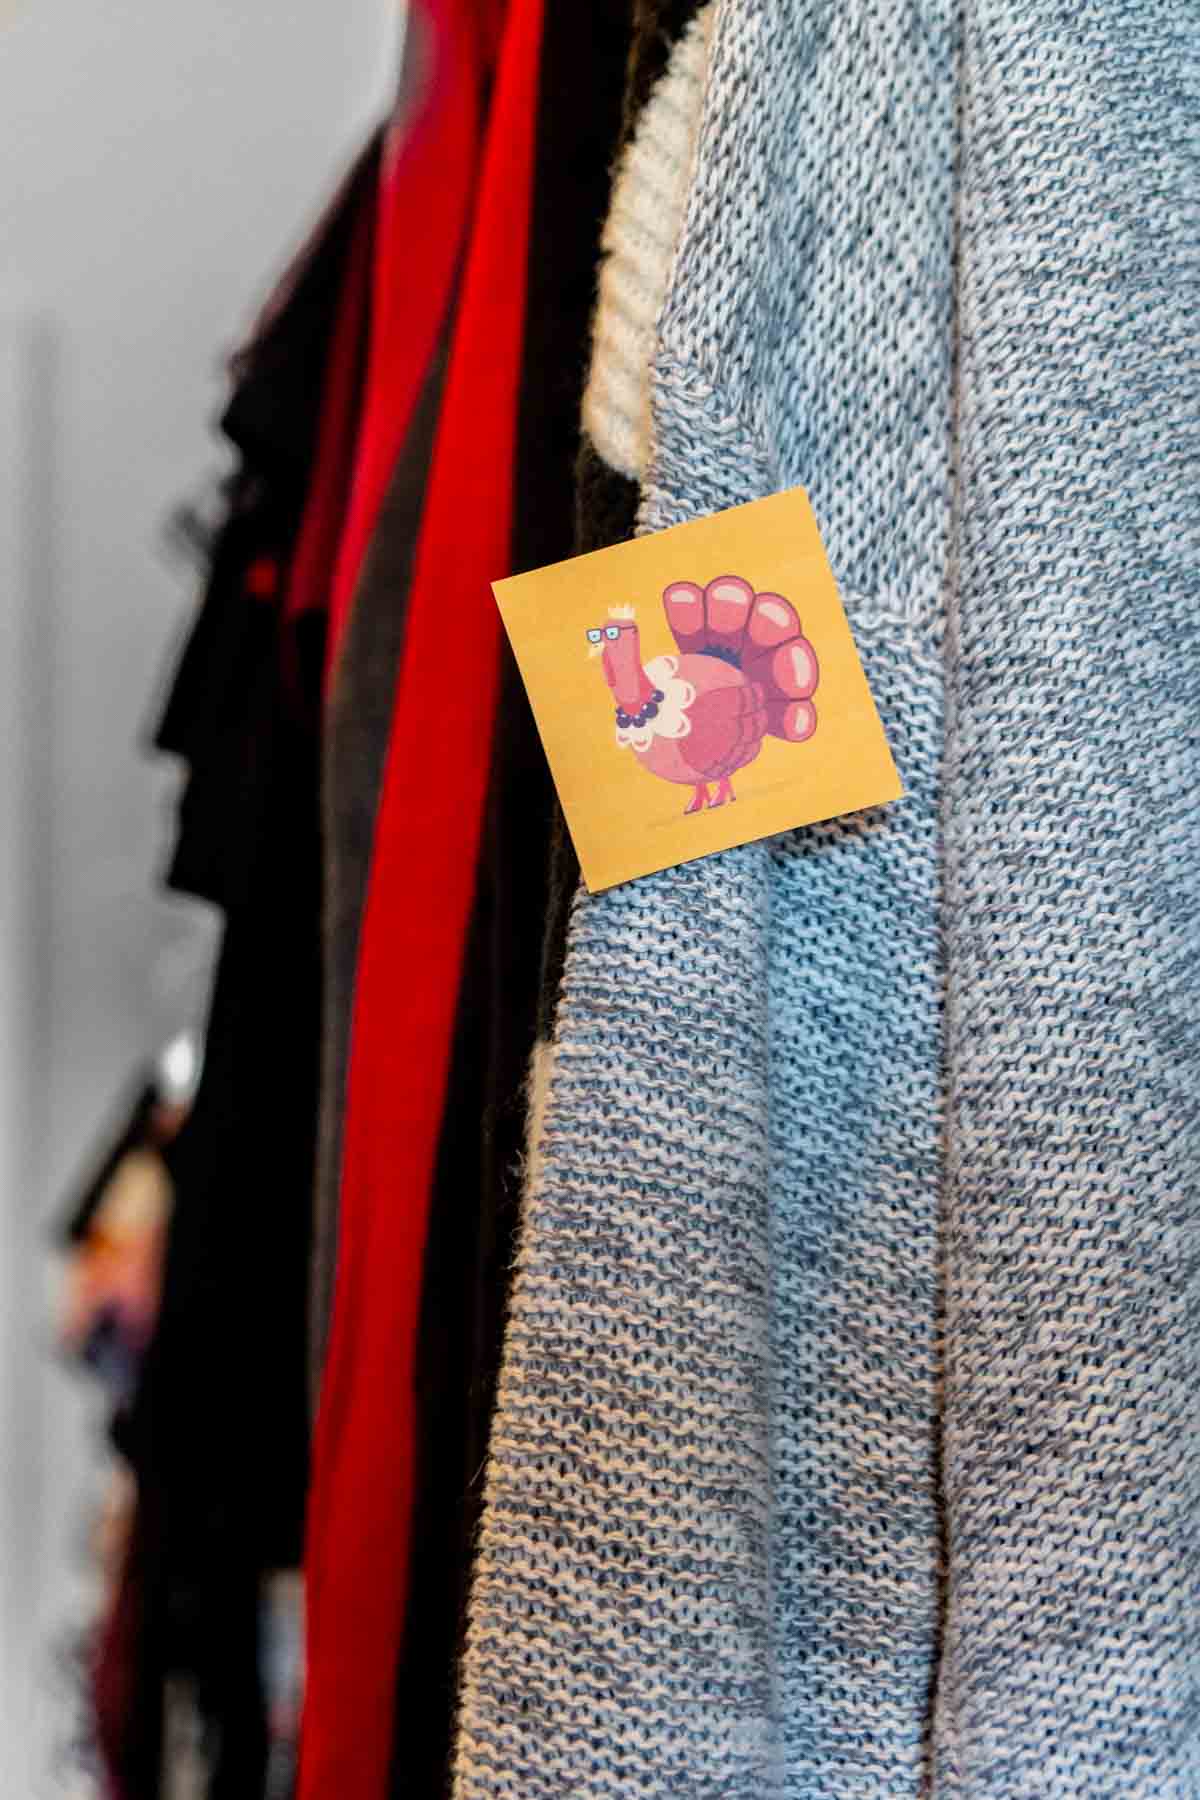 Turkey card hidden on a sweater in a closet